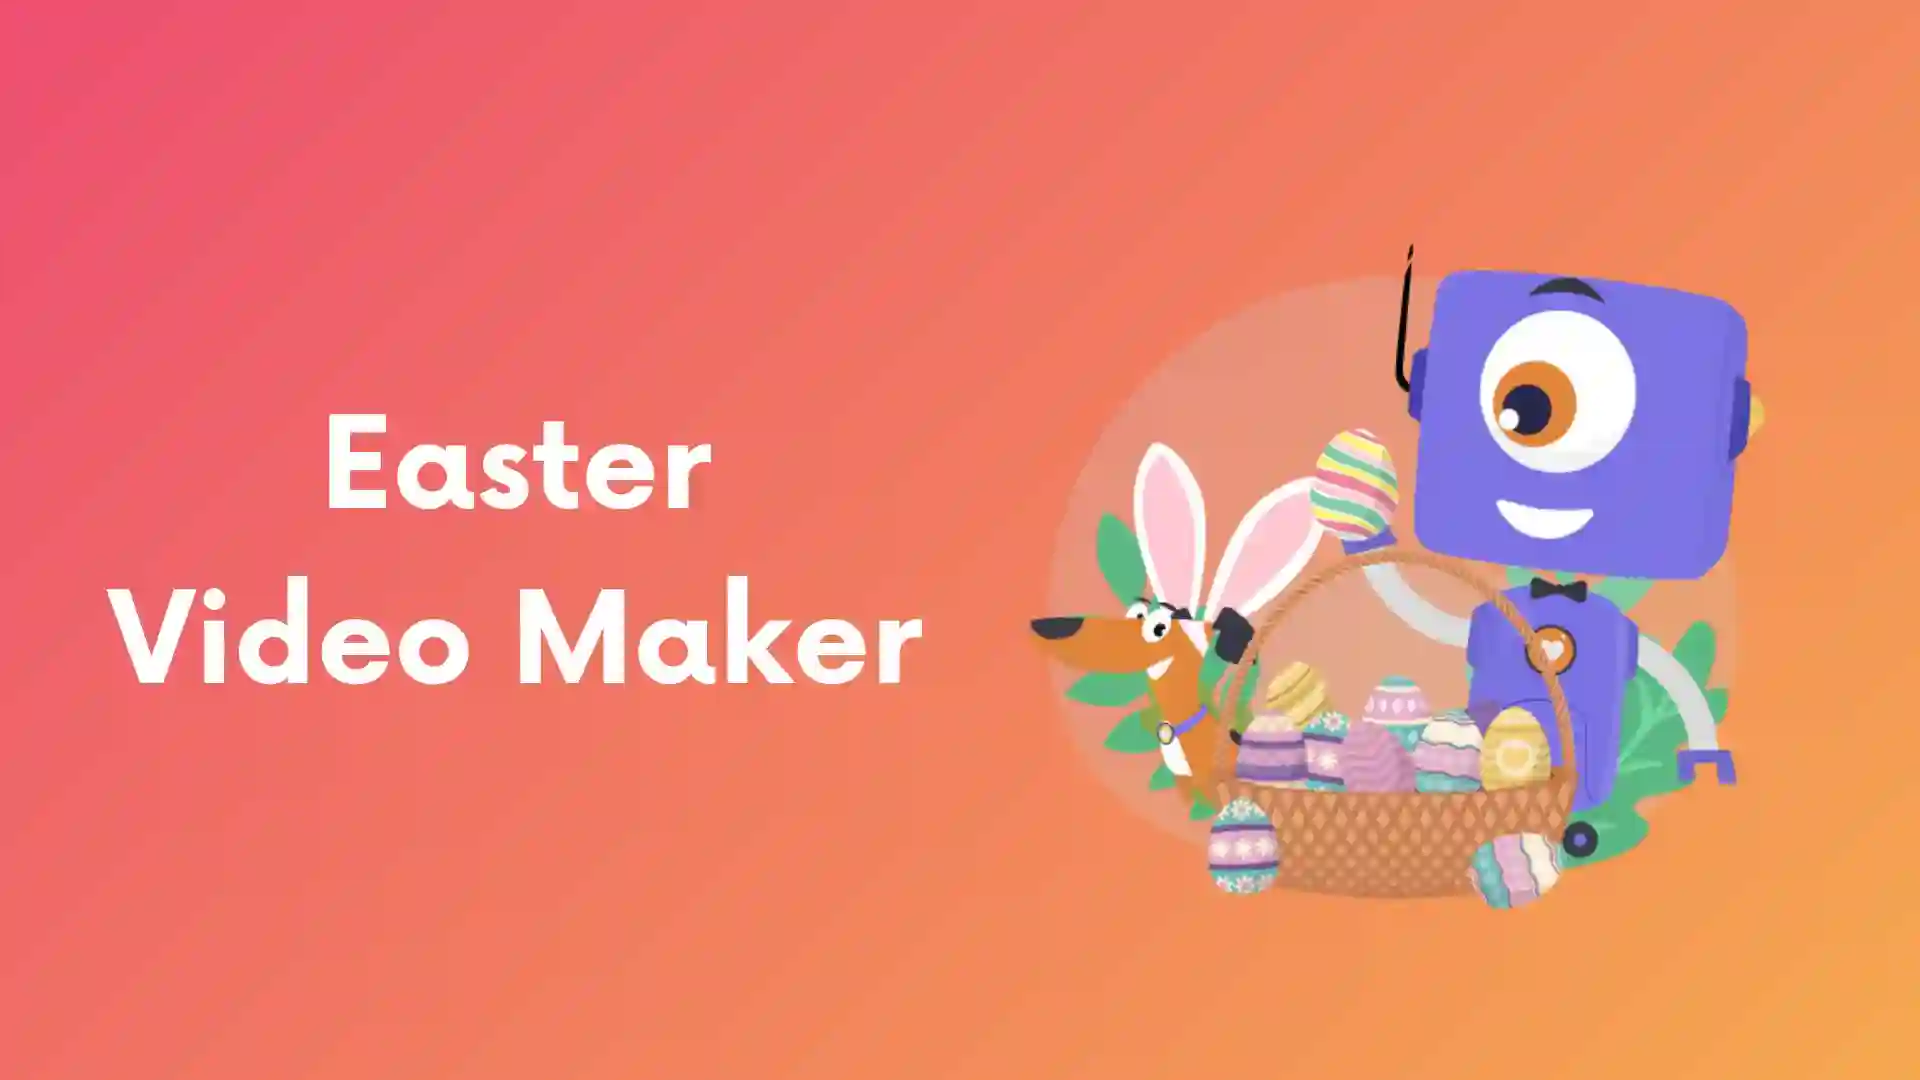 Easter video maker banner image